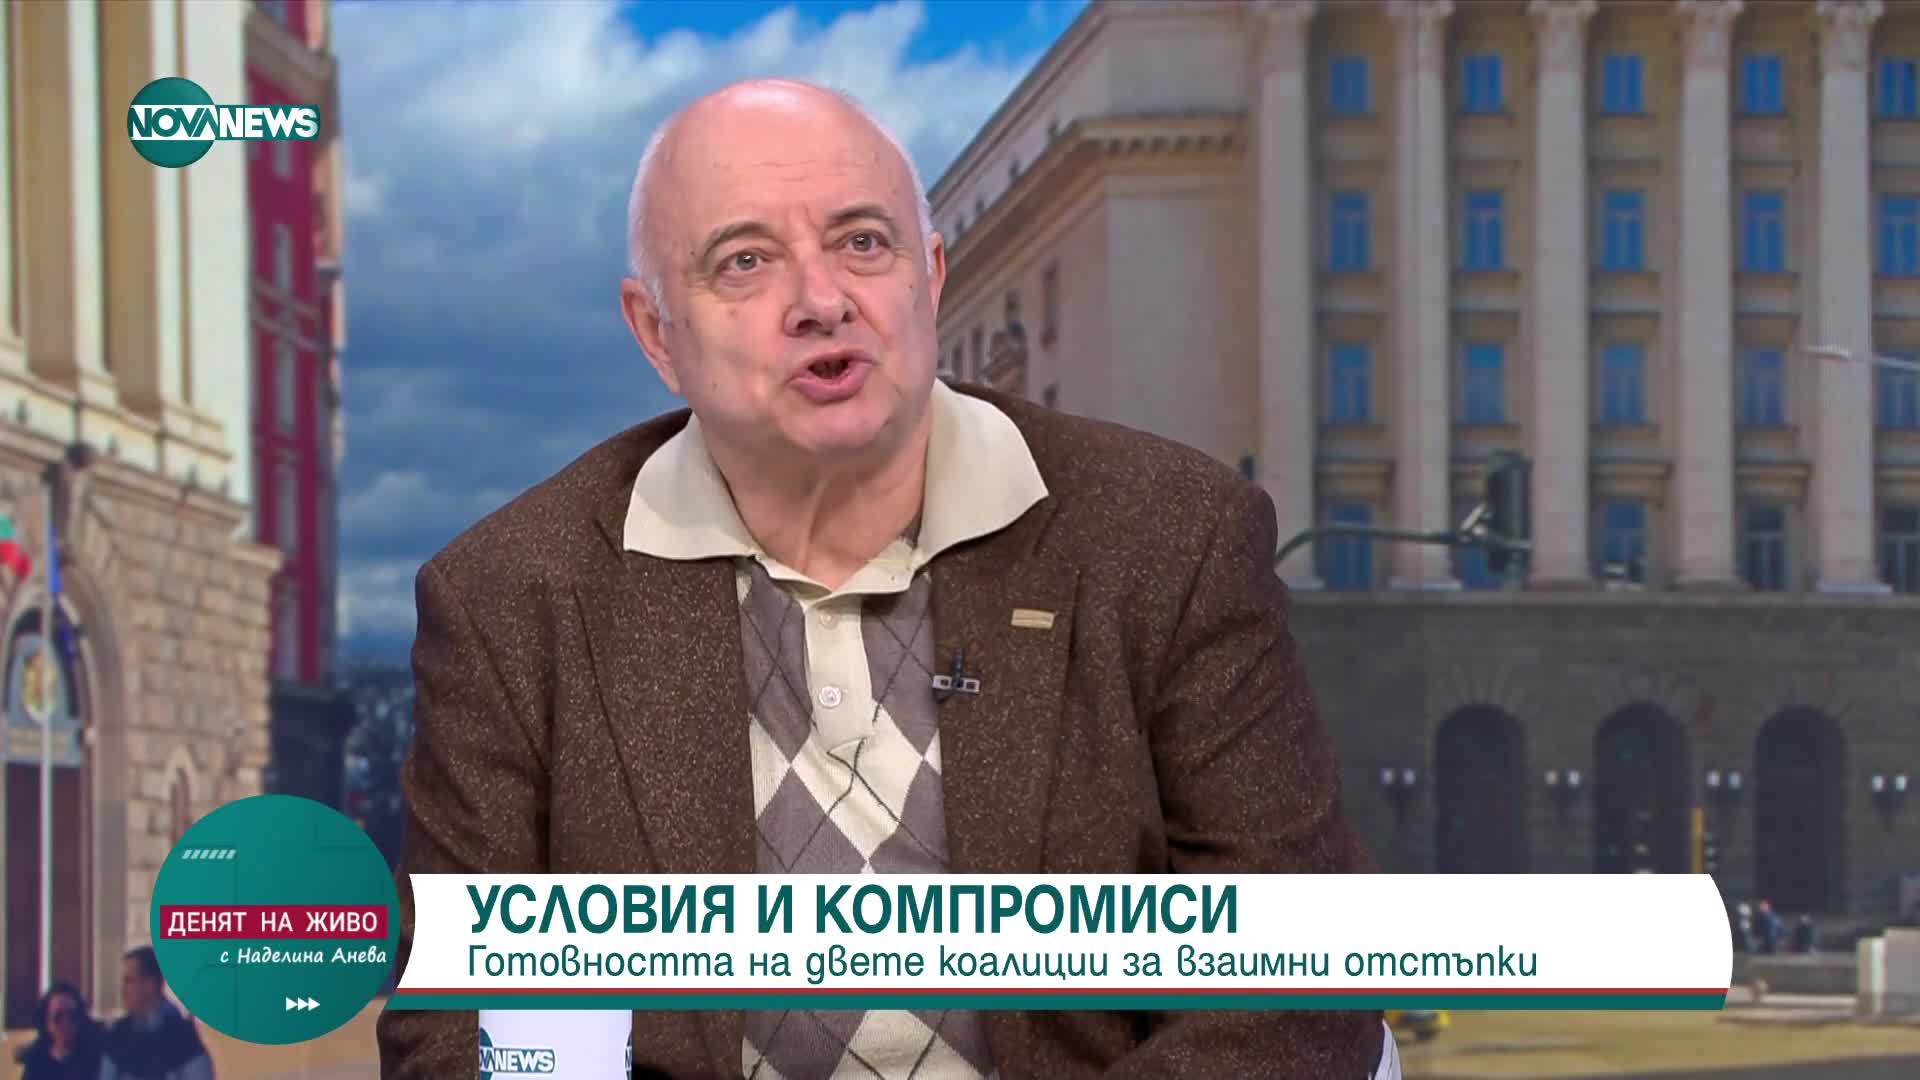 Васил Тончев: Споразумението надгражда Меморандума и Коалиционния документ